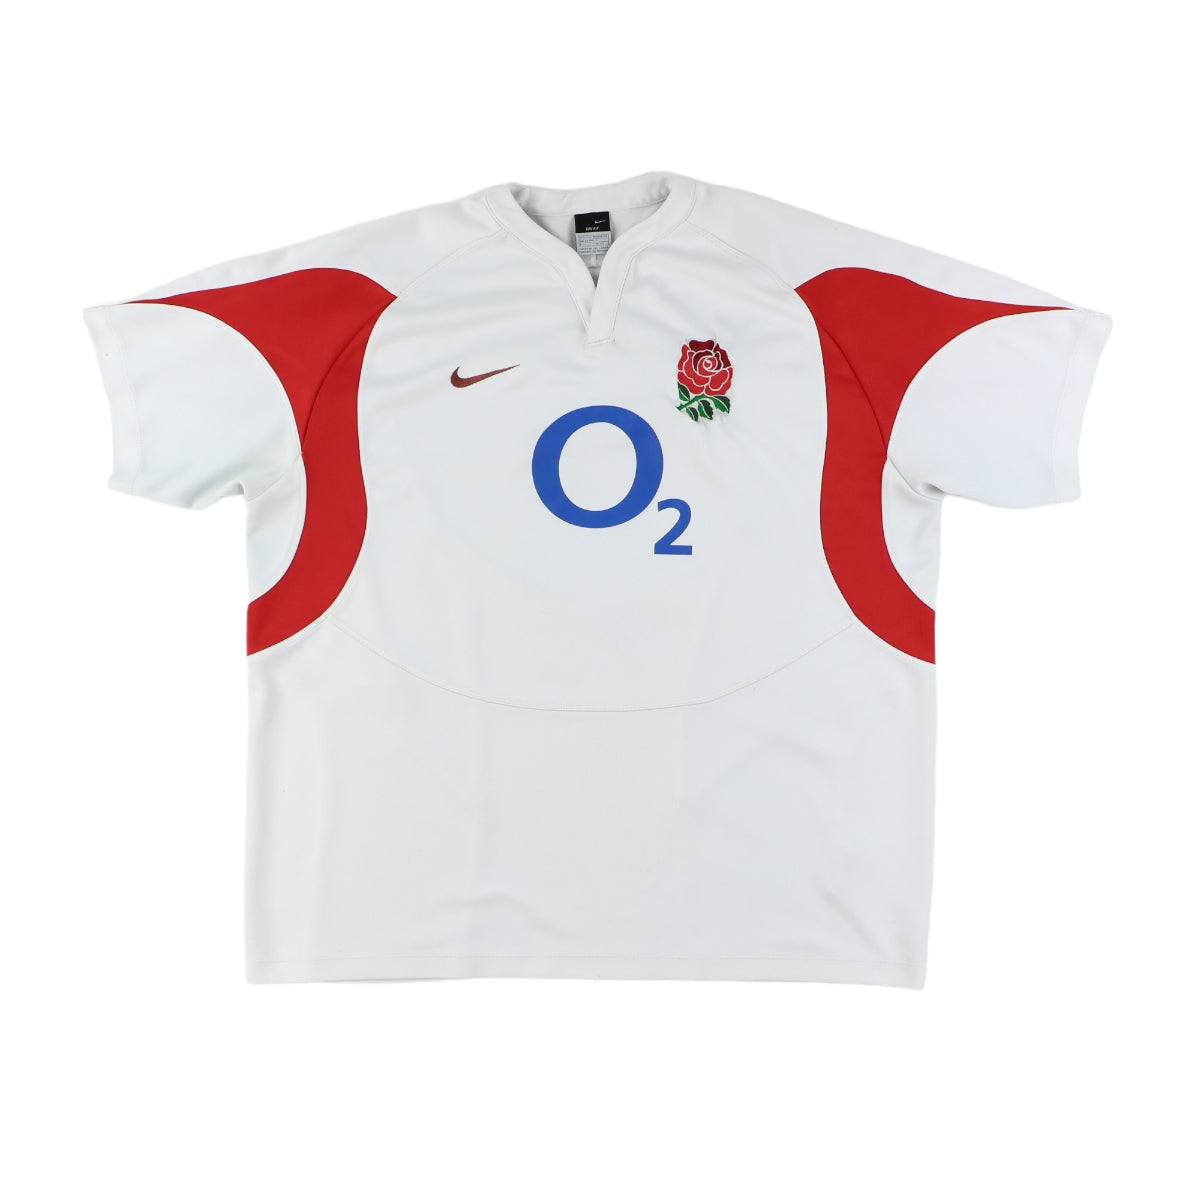 Nike Rugby Shirt (XXL)